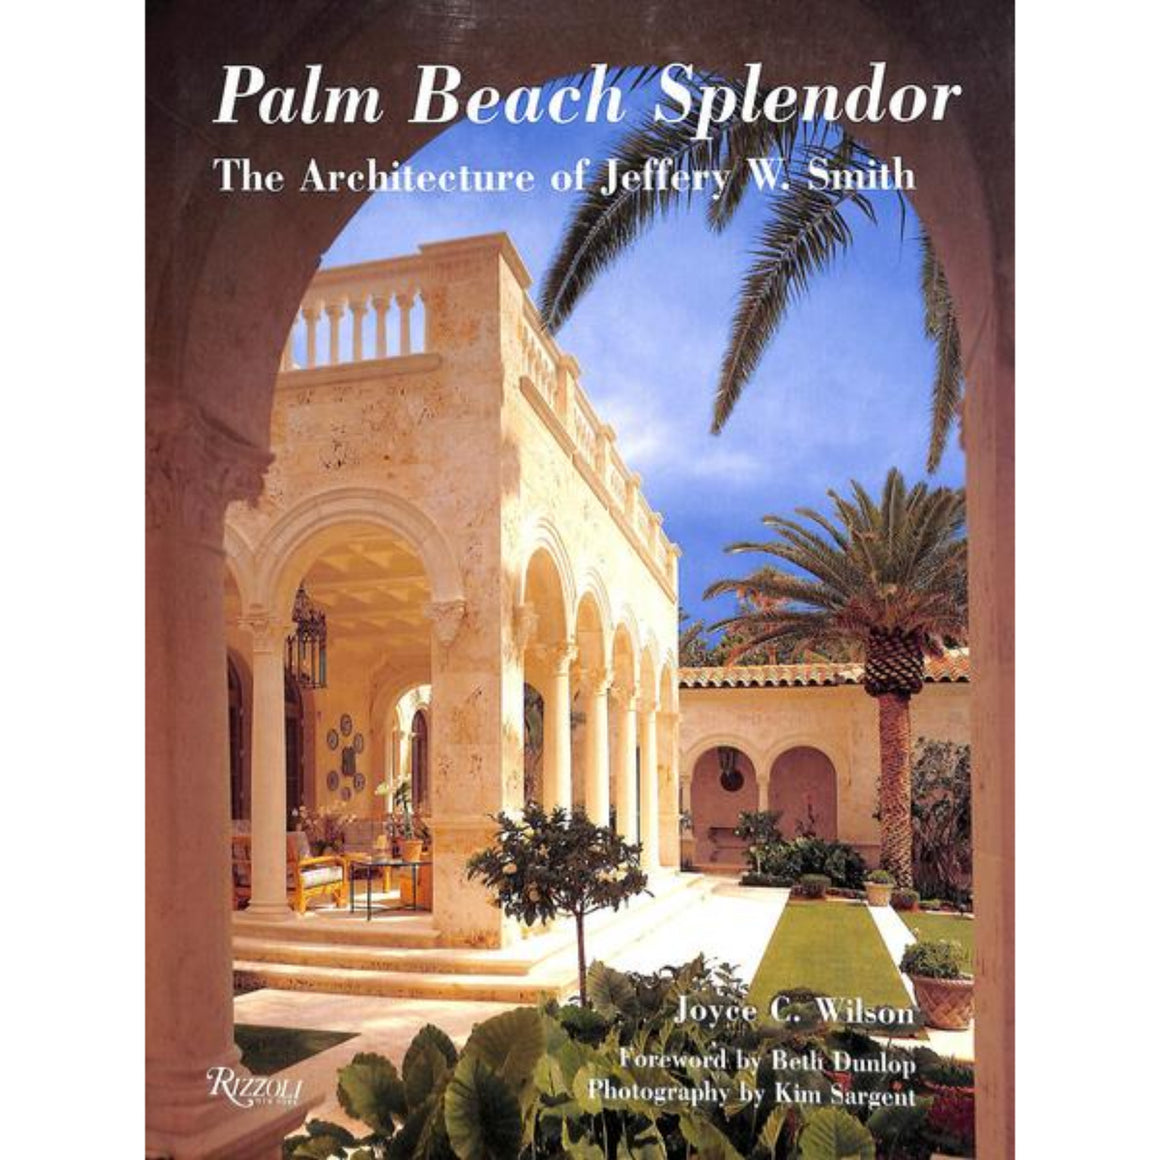 "Palm Beach Splendor: The Architecture of Jeffrey W. Smith" 2005 (SOLD)